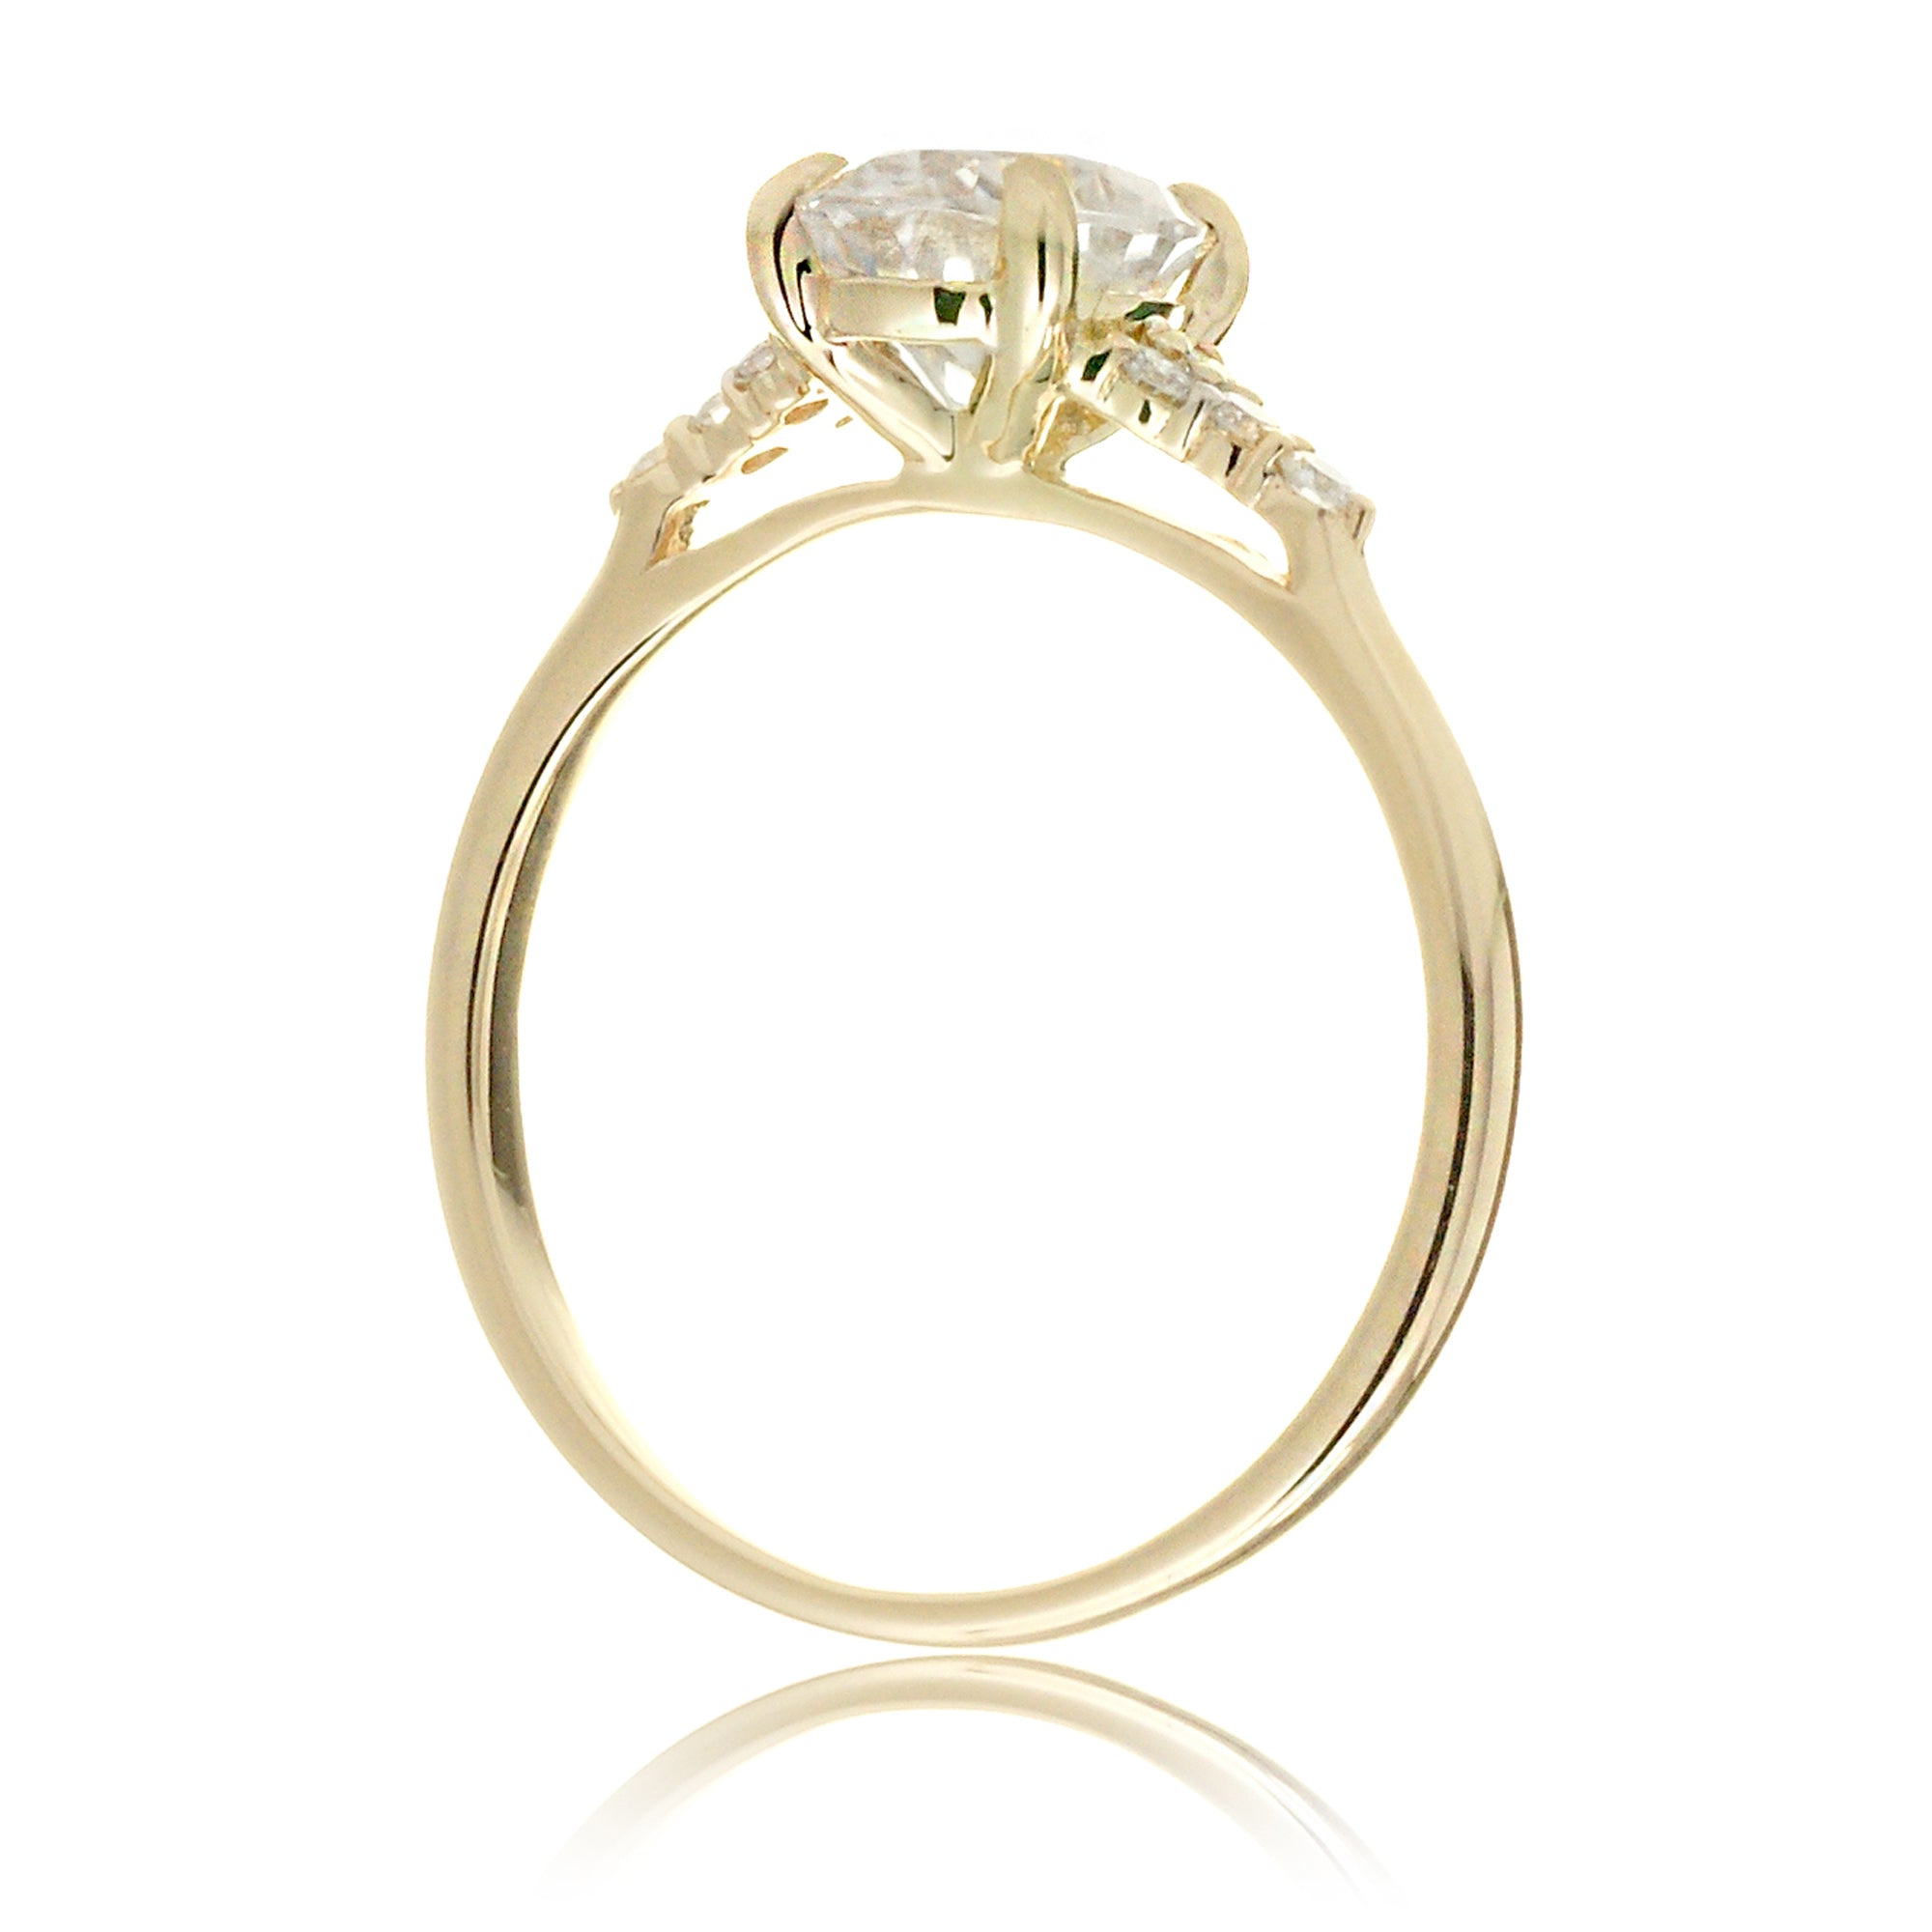 Emerald cut moissanite three stone diamond ring in yellow gold